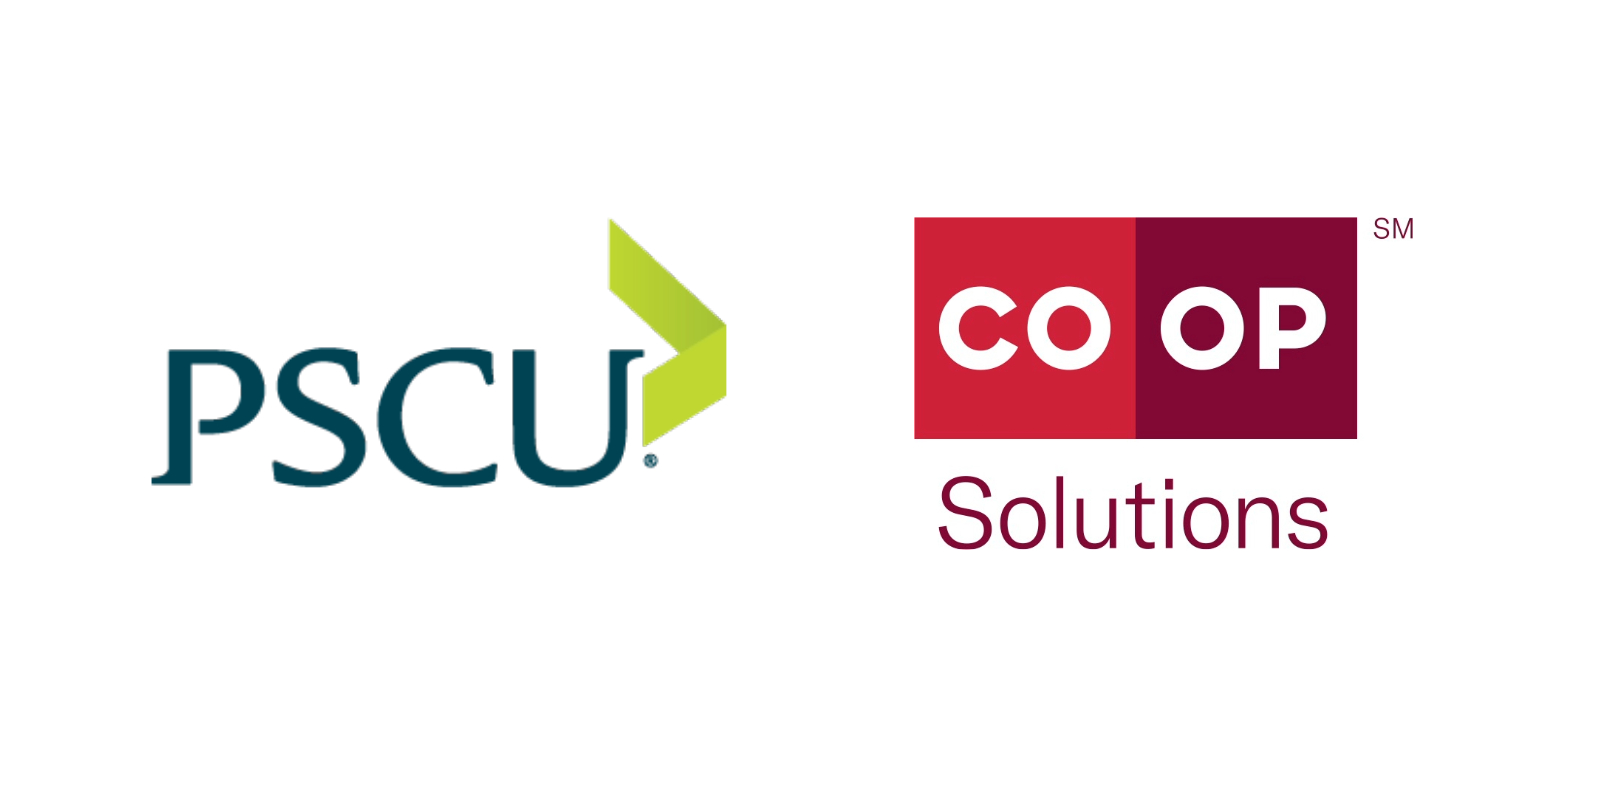 PSCU/Co-op Solutions